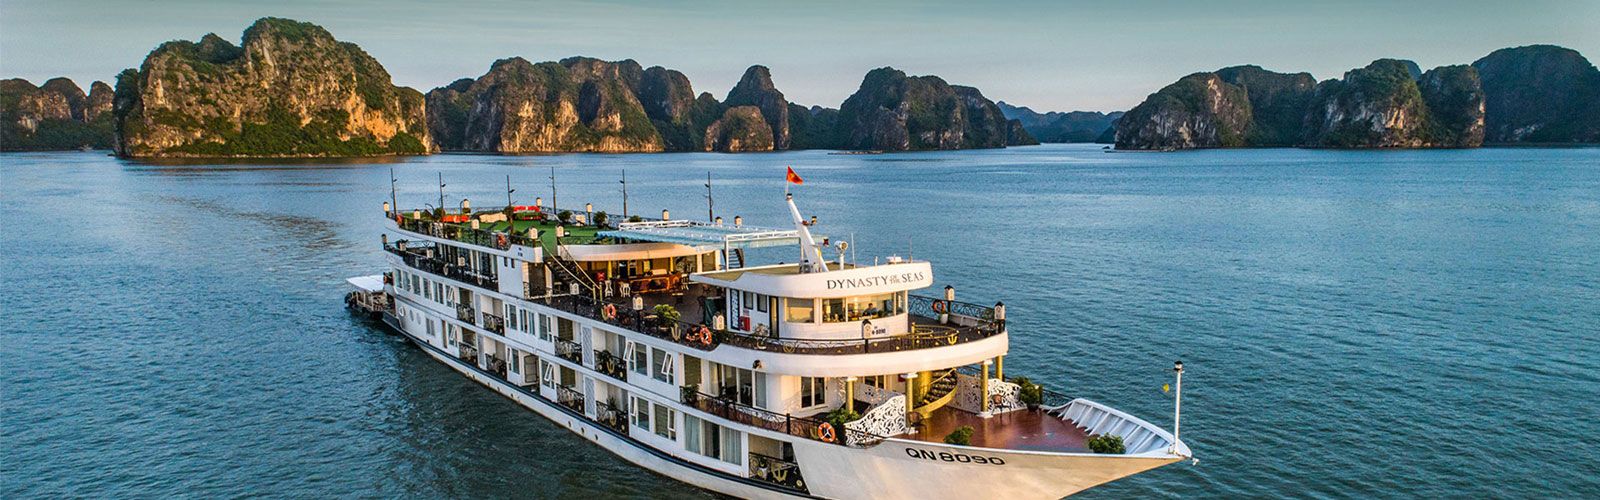 Cambodia Cruise Tours